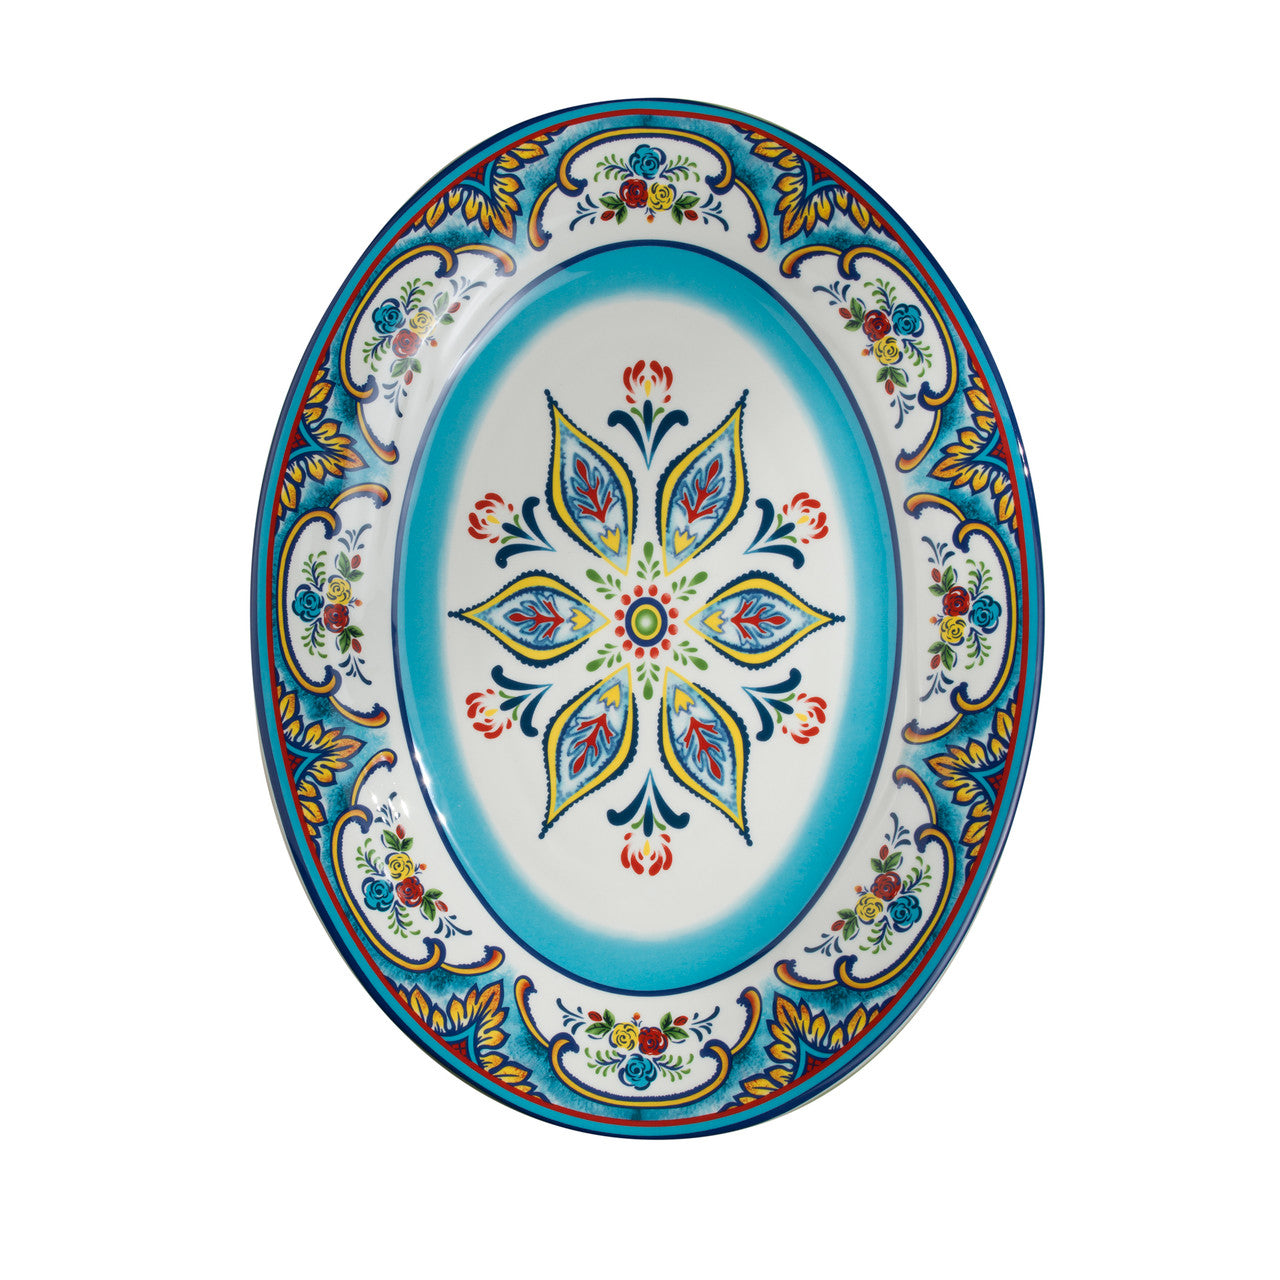 Zanzibar Ceramic Artisan Design 16-Inch Oval Serving Platter